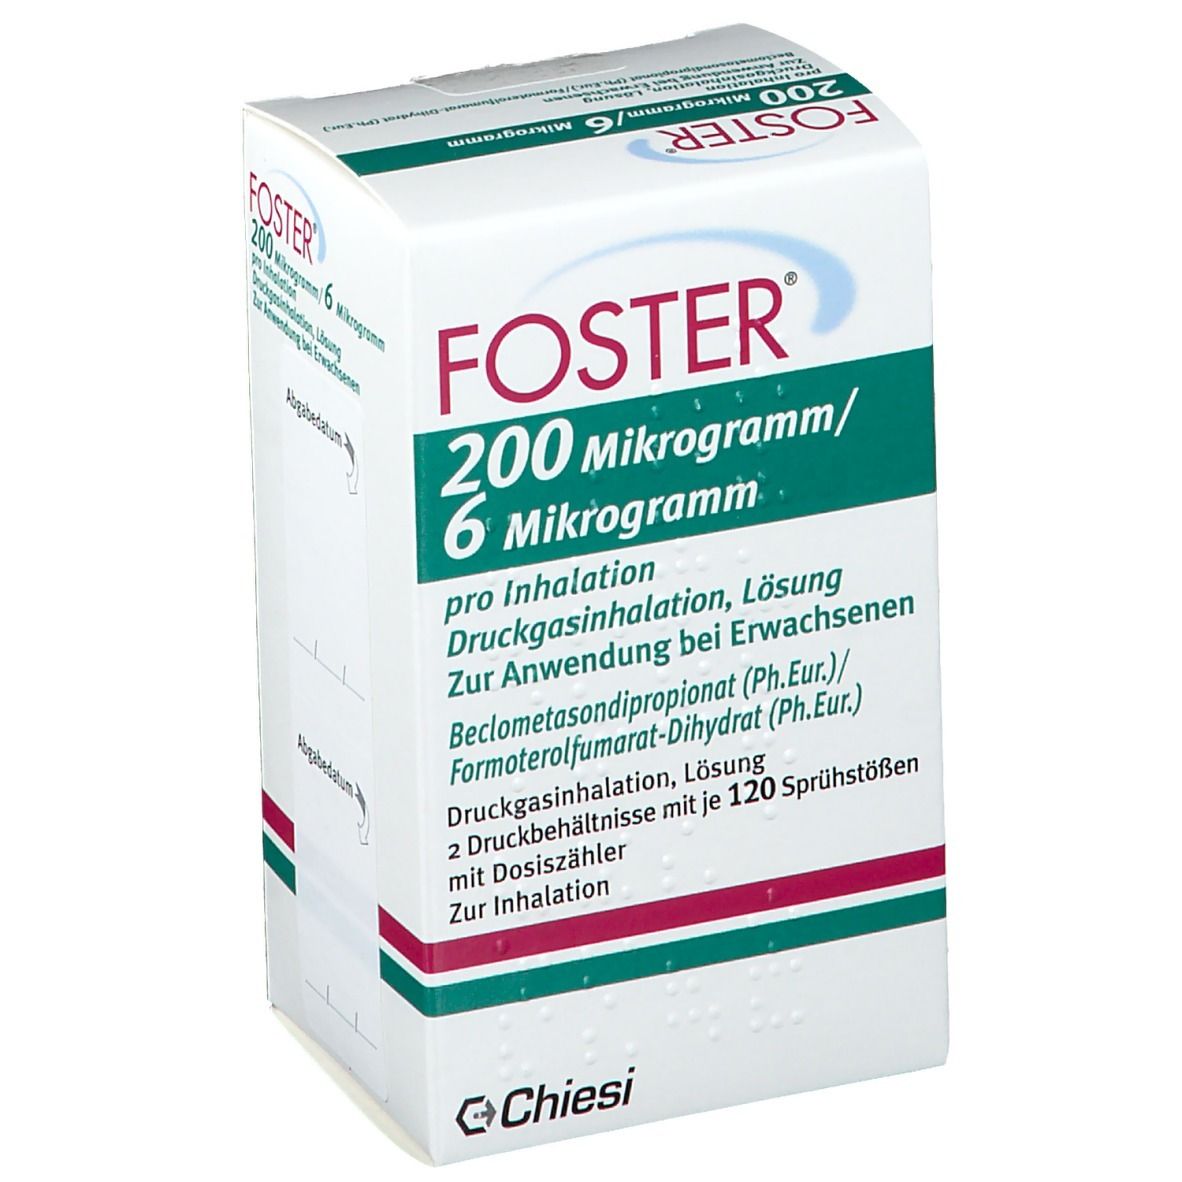 FOSTER® 200/6 µg